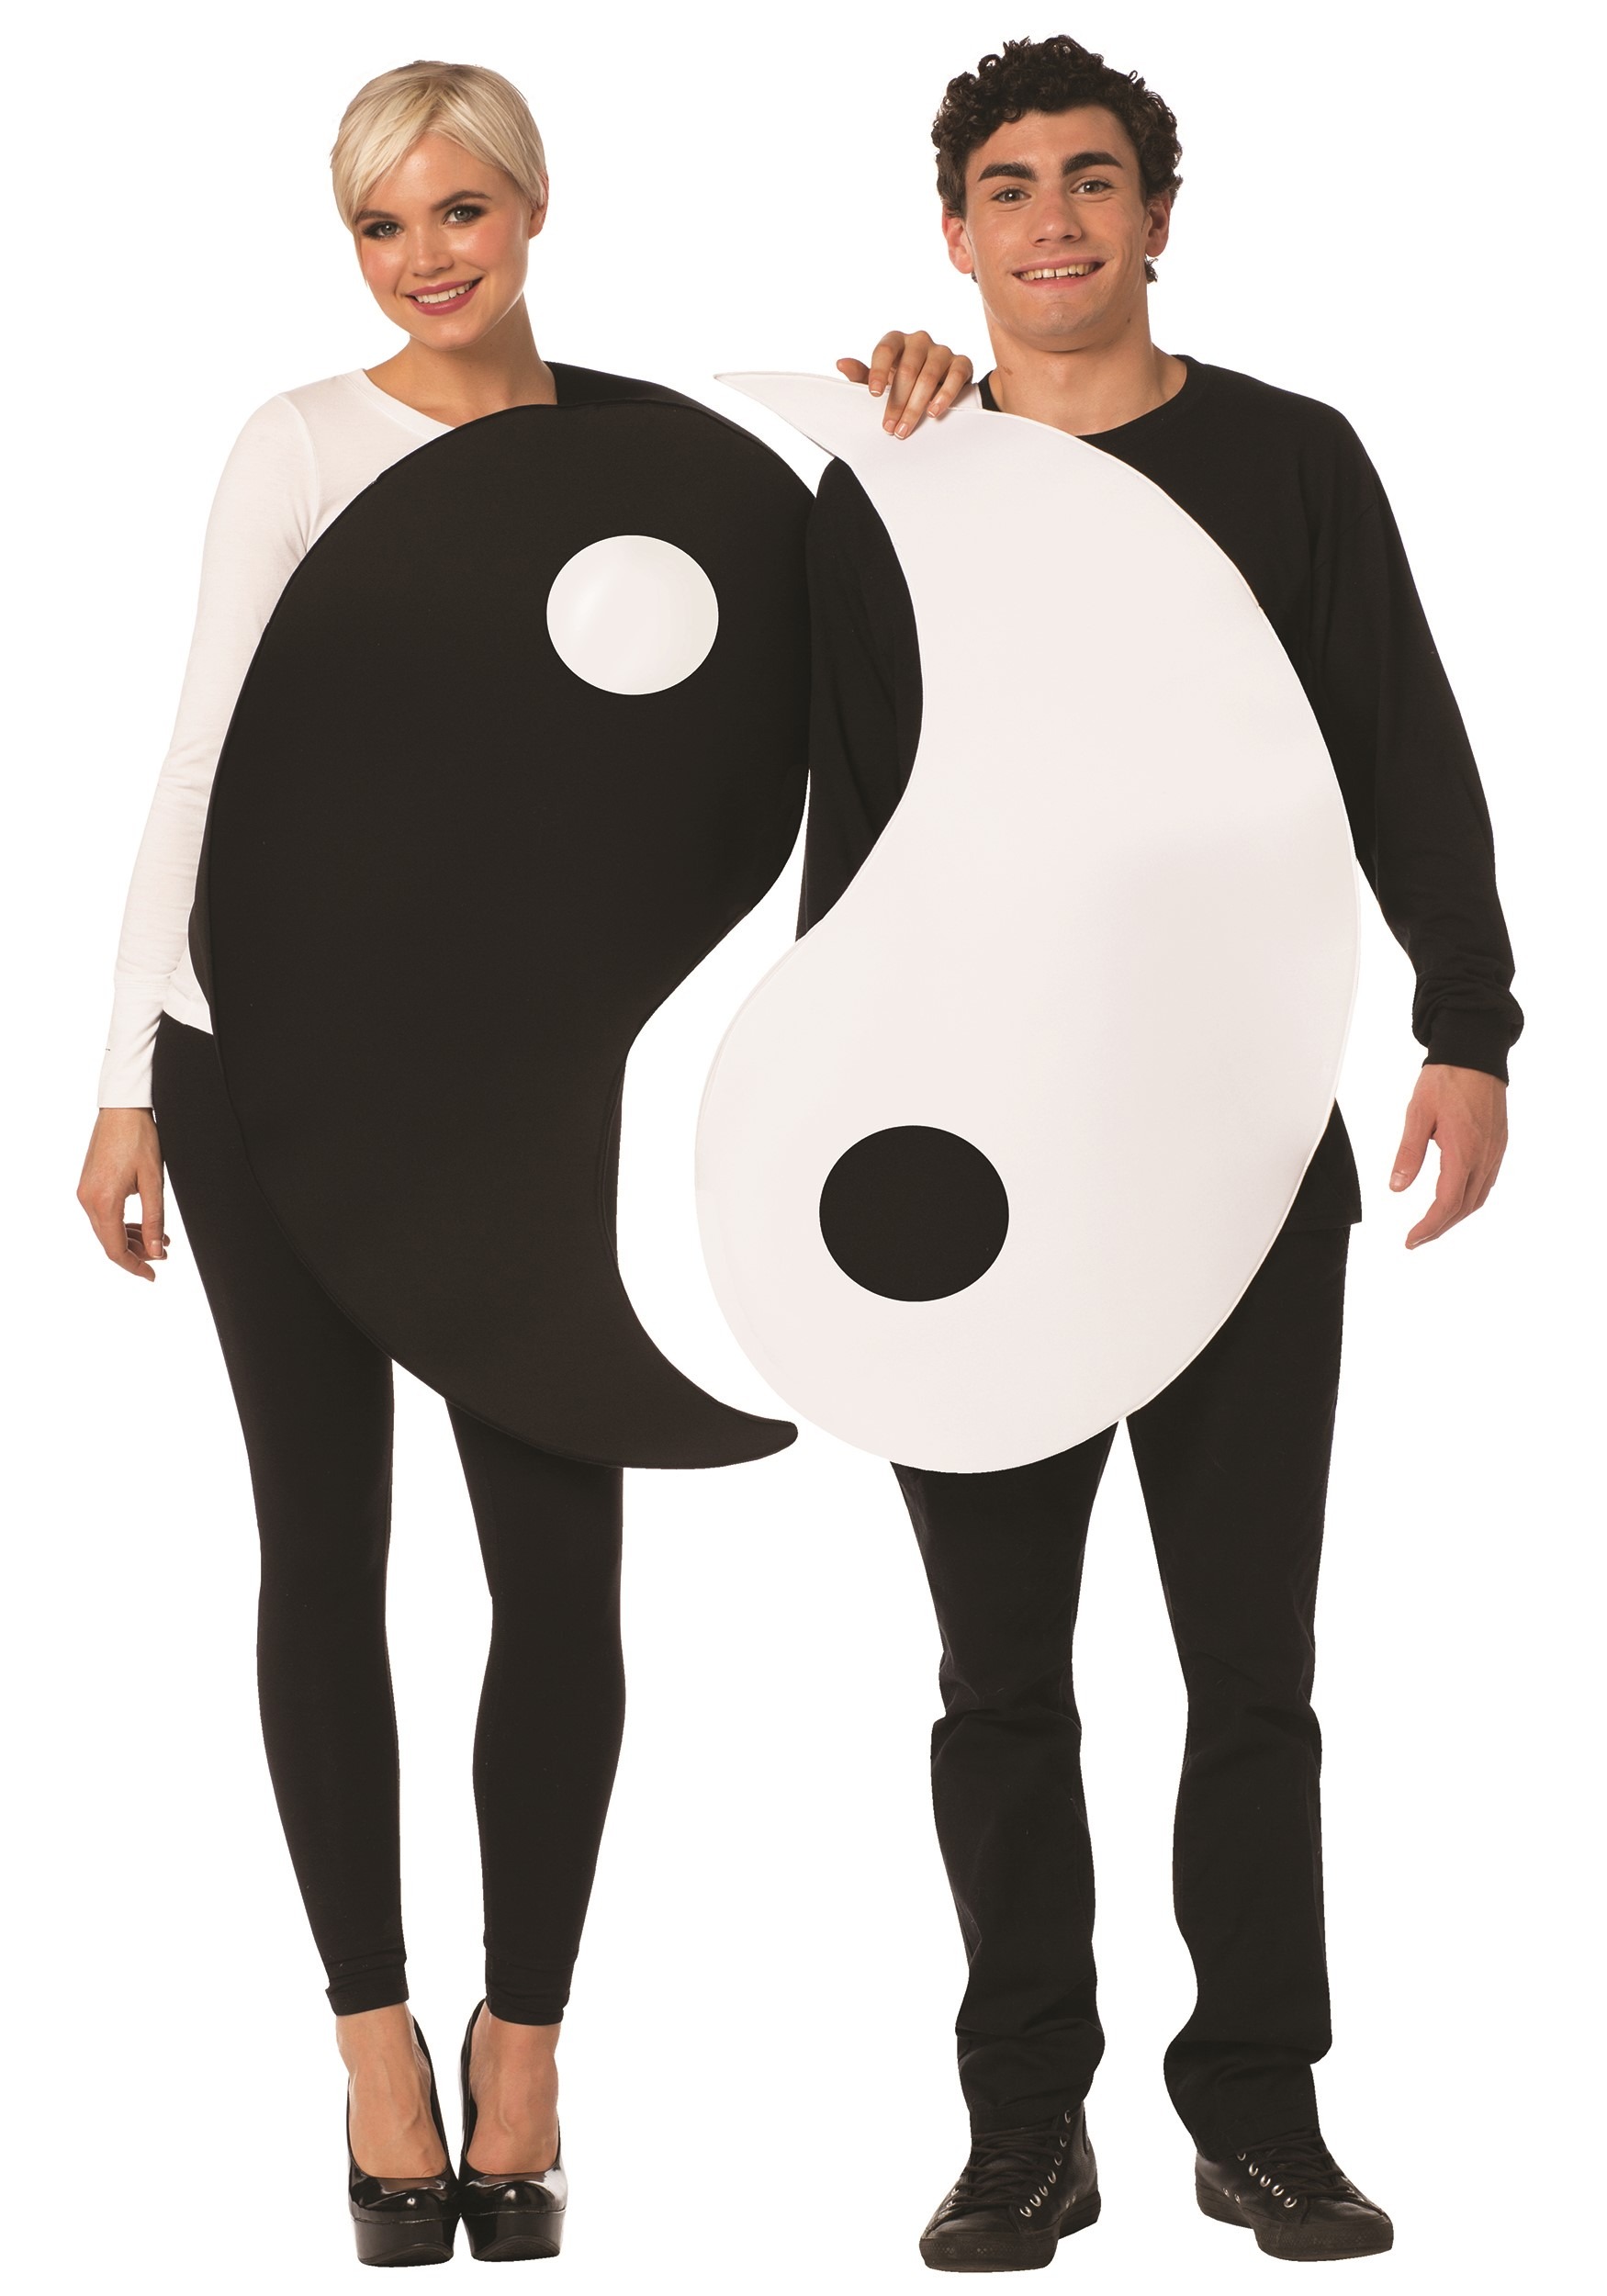 Yin & Yang Couples Costume